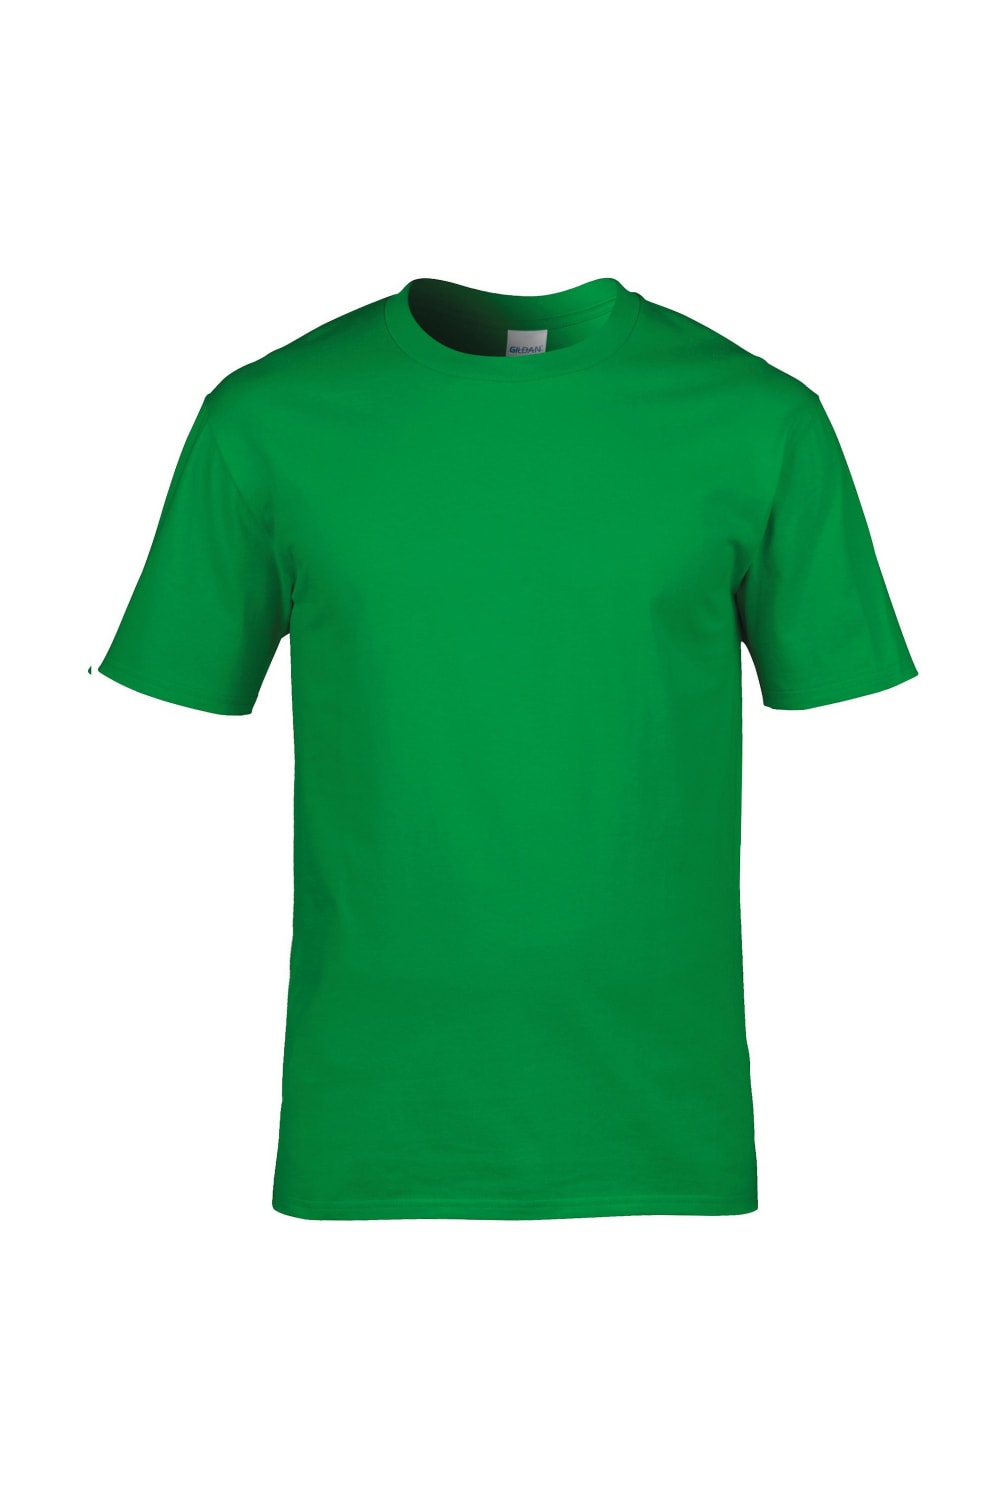 Gildan Mens Premium Cotton Ring Spun Short Sleeve T-Shirt (Irish Green)